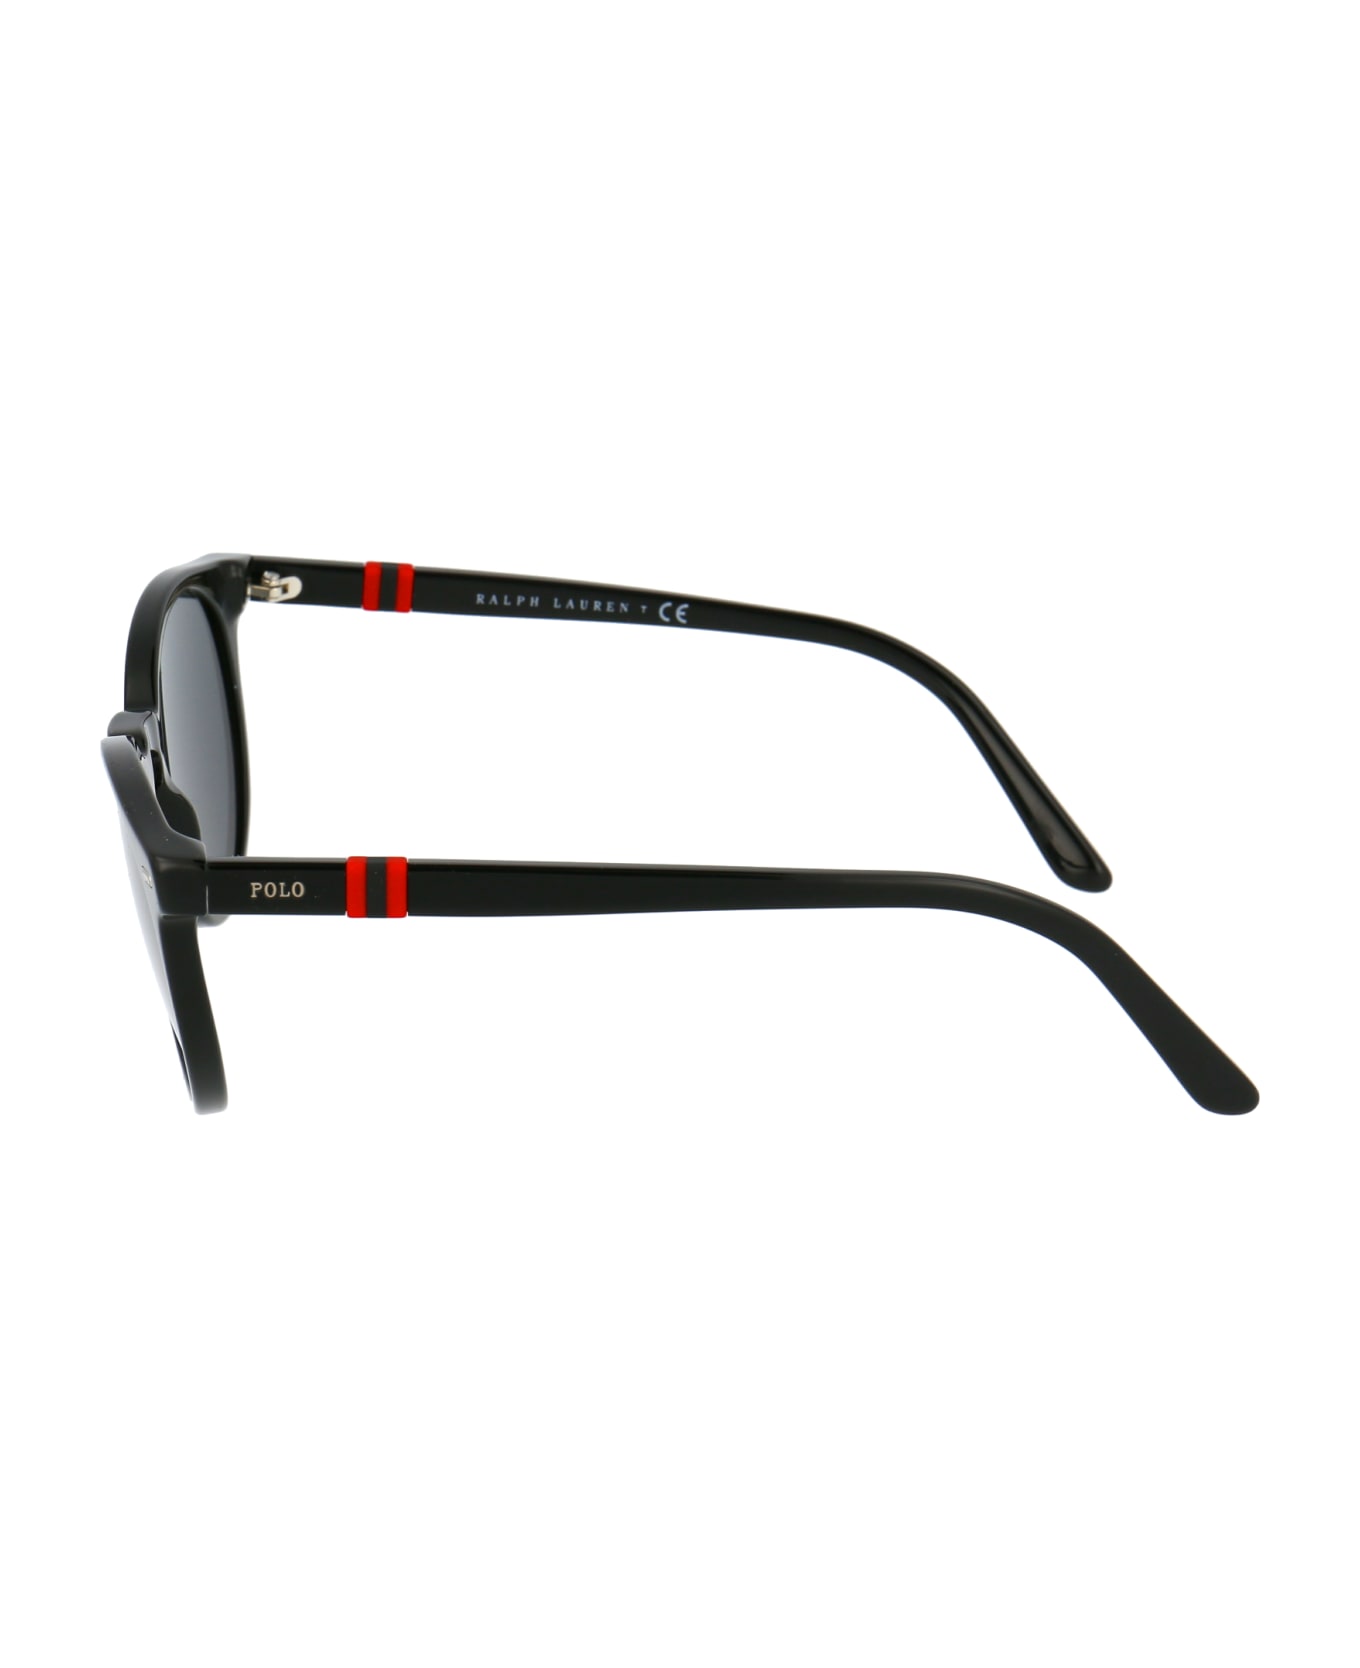 Polo Ralph Lauren 0ph4151 Sunglasses - 500187 SHINY BLACK